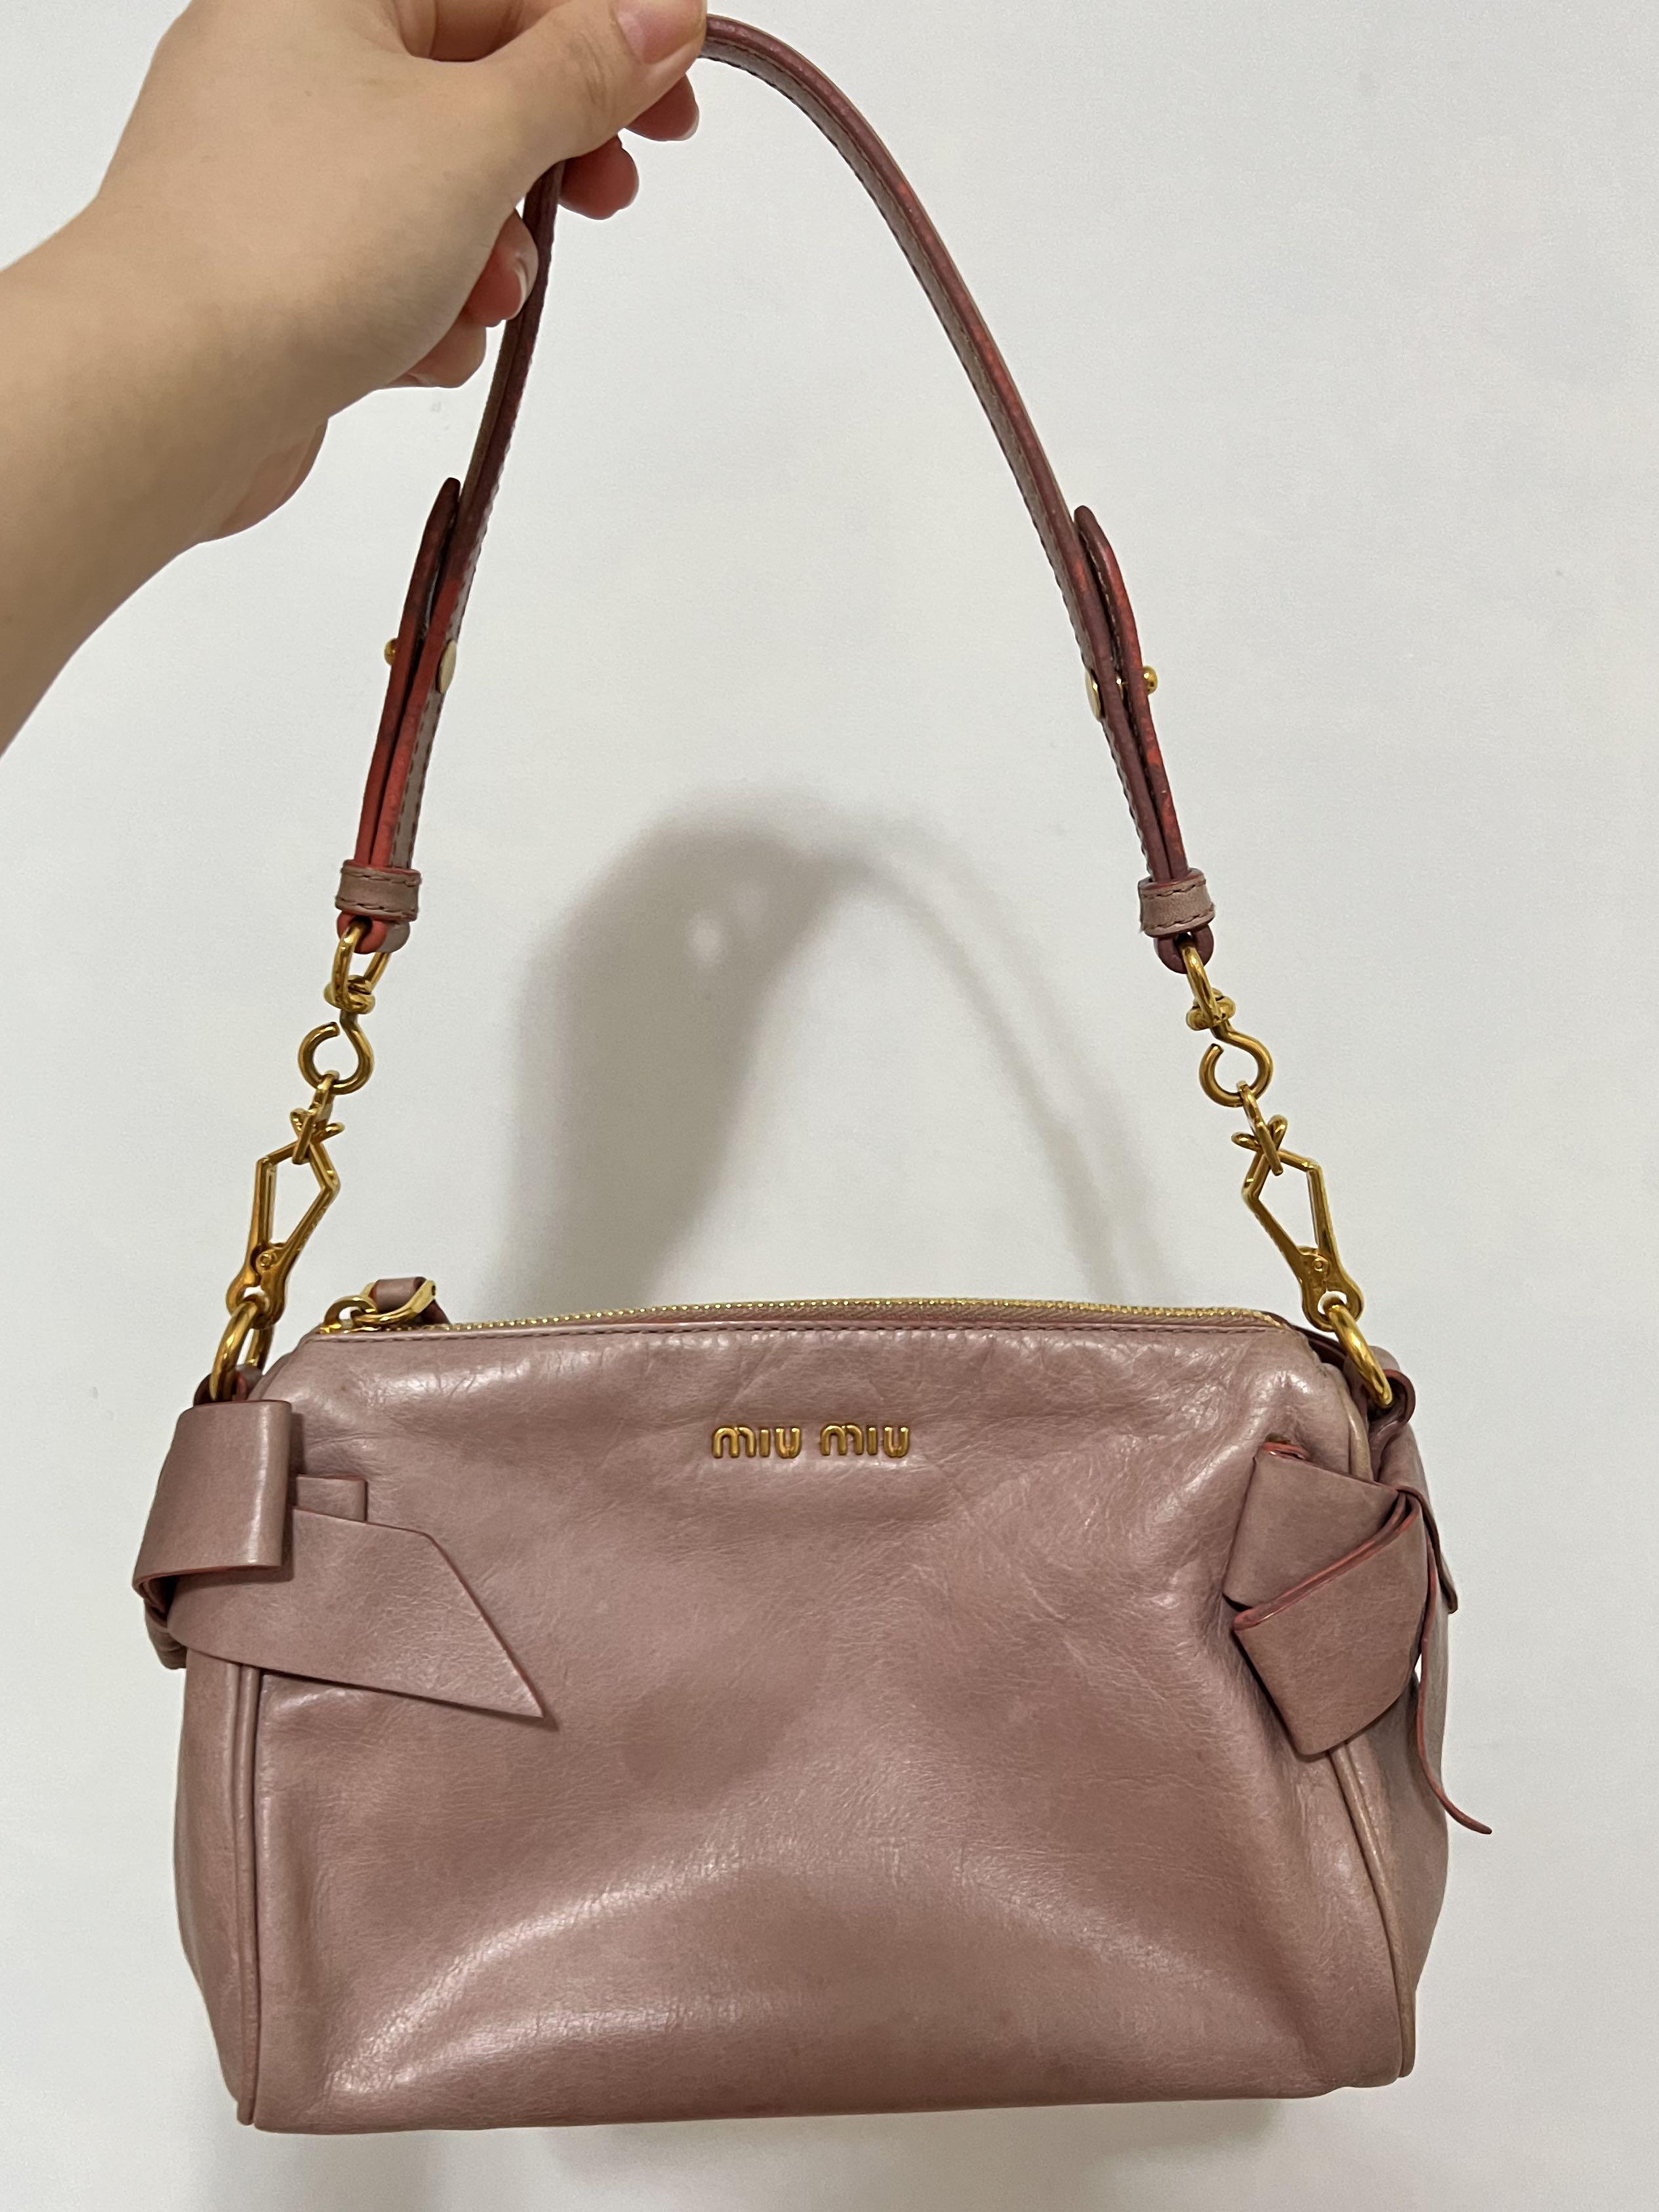 Buy Online Miu Miu-Bow Small Bag at affordable Price in Singapore